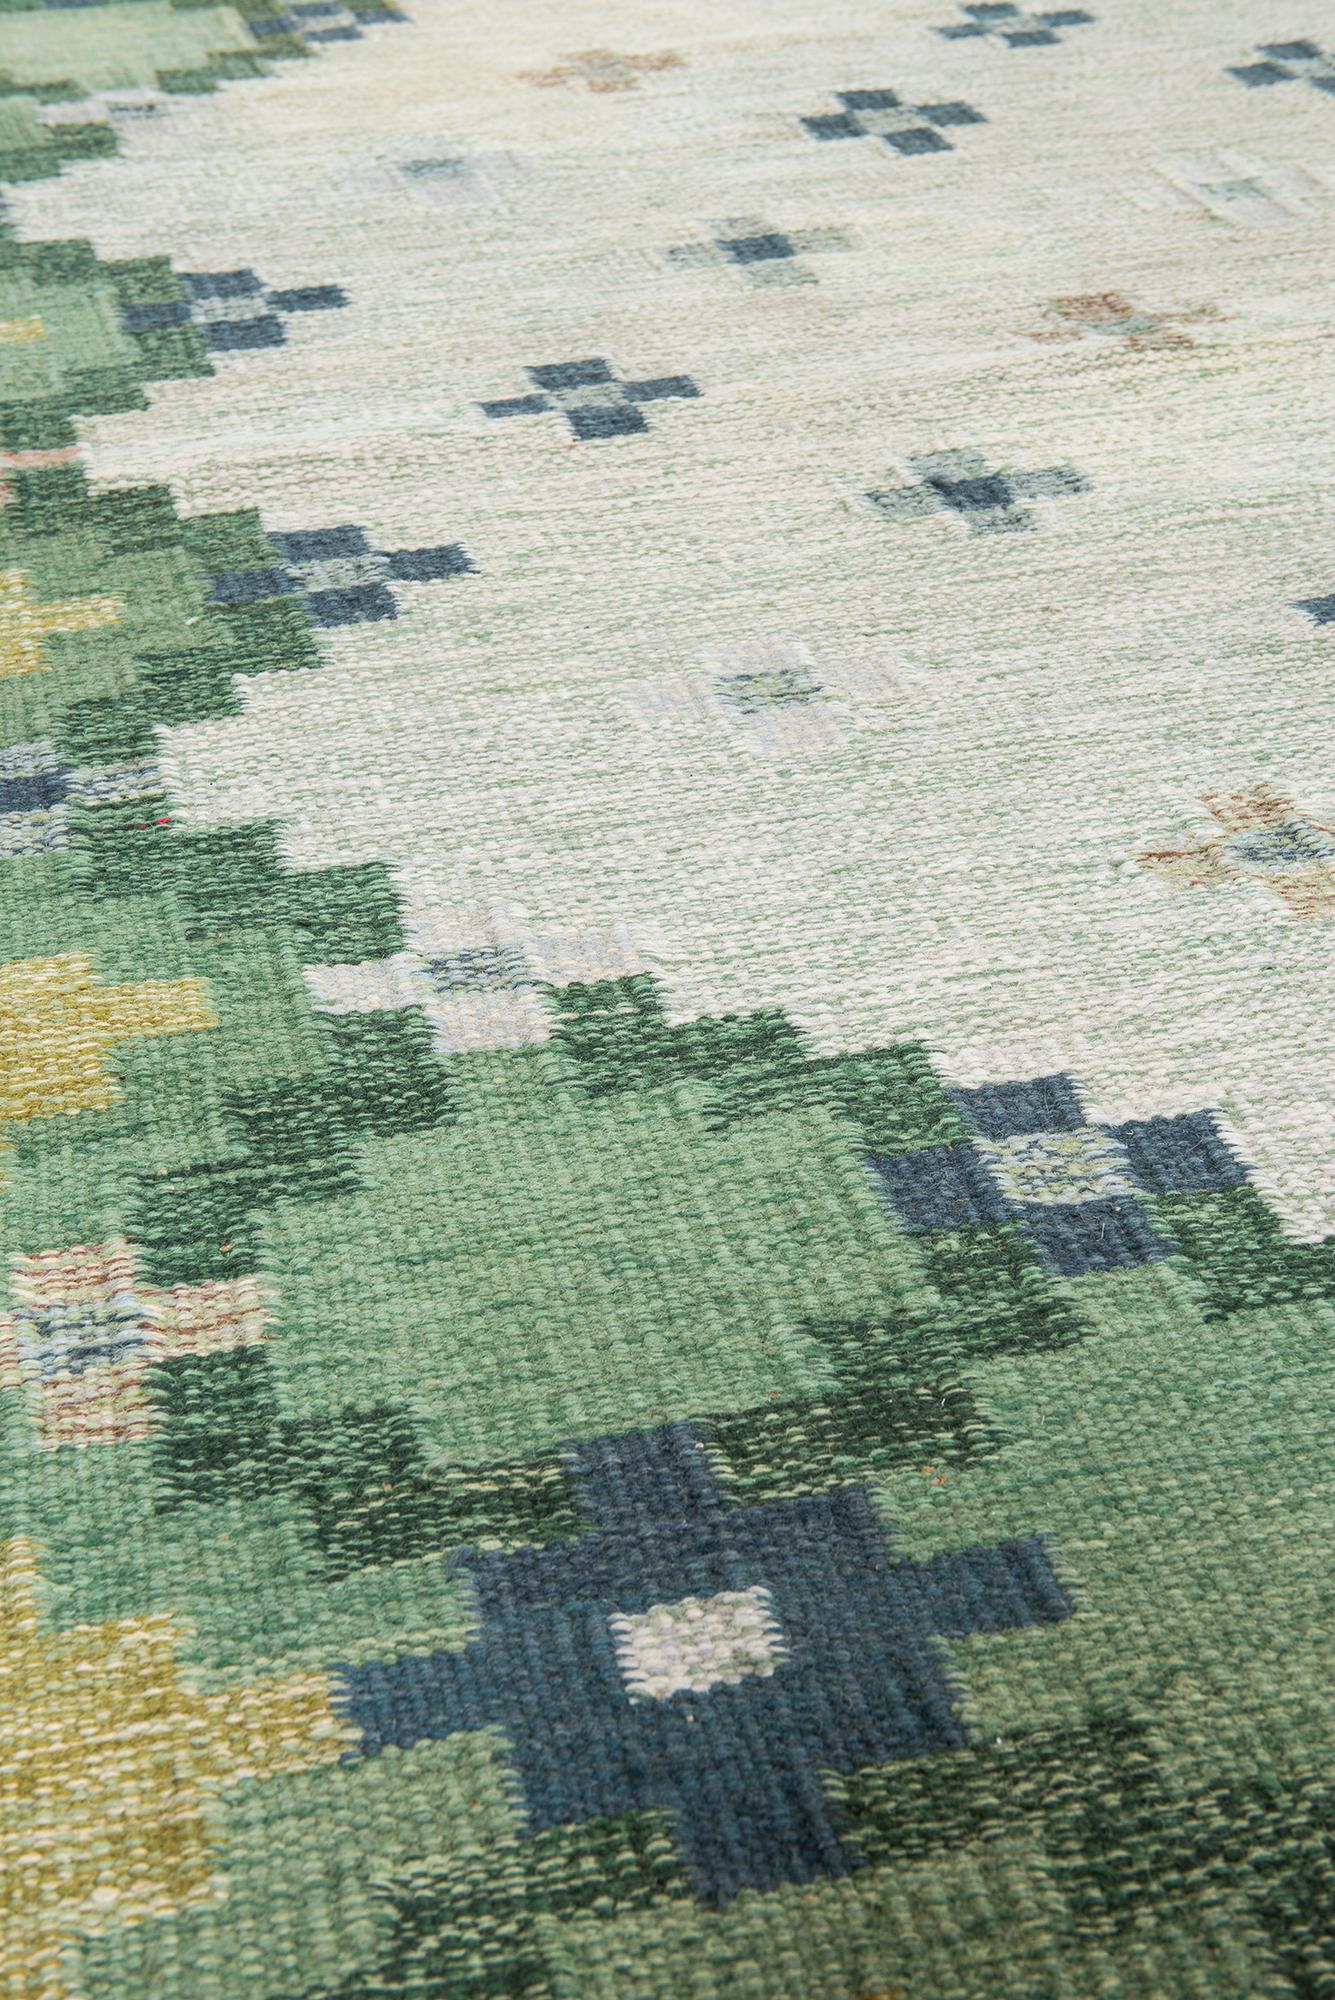 Midcentury carpet designed by Anne-Marie Boberg. Produced in Sweden